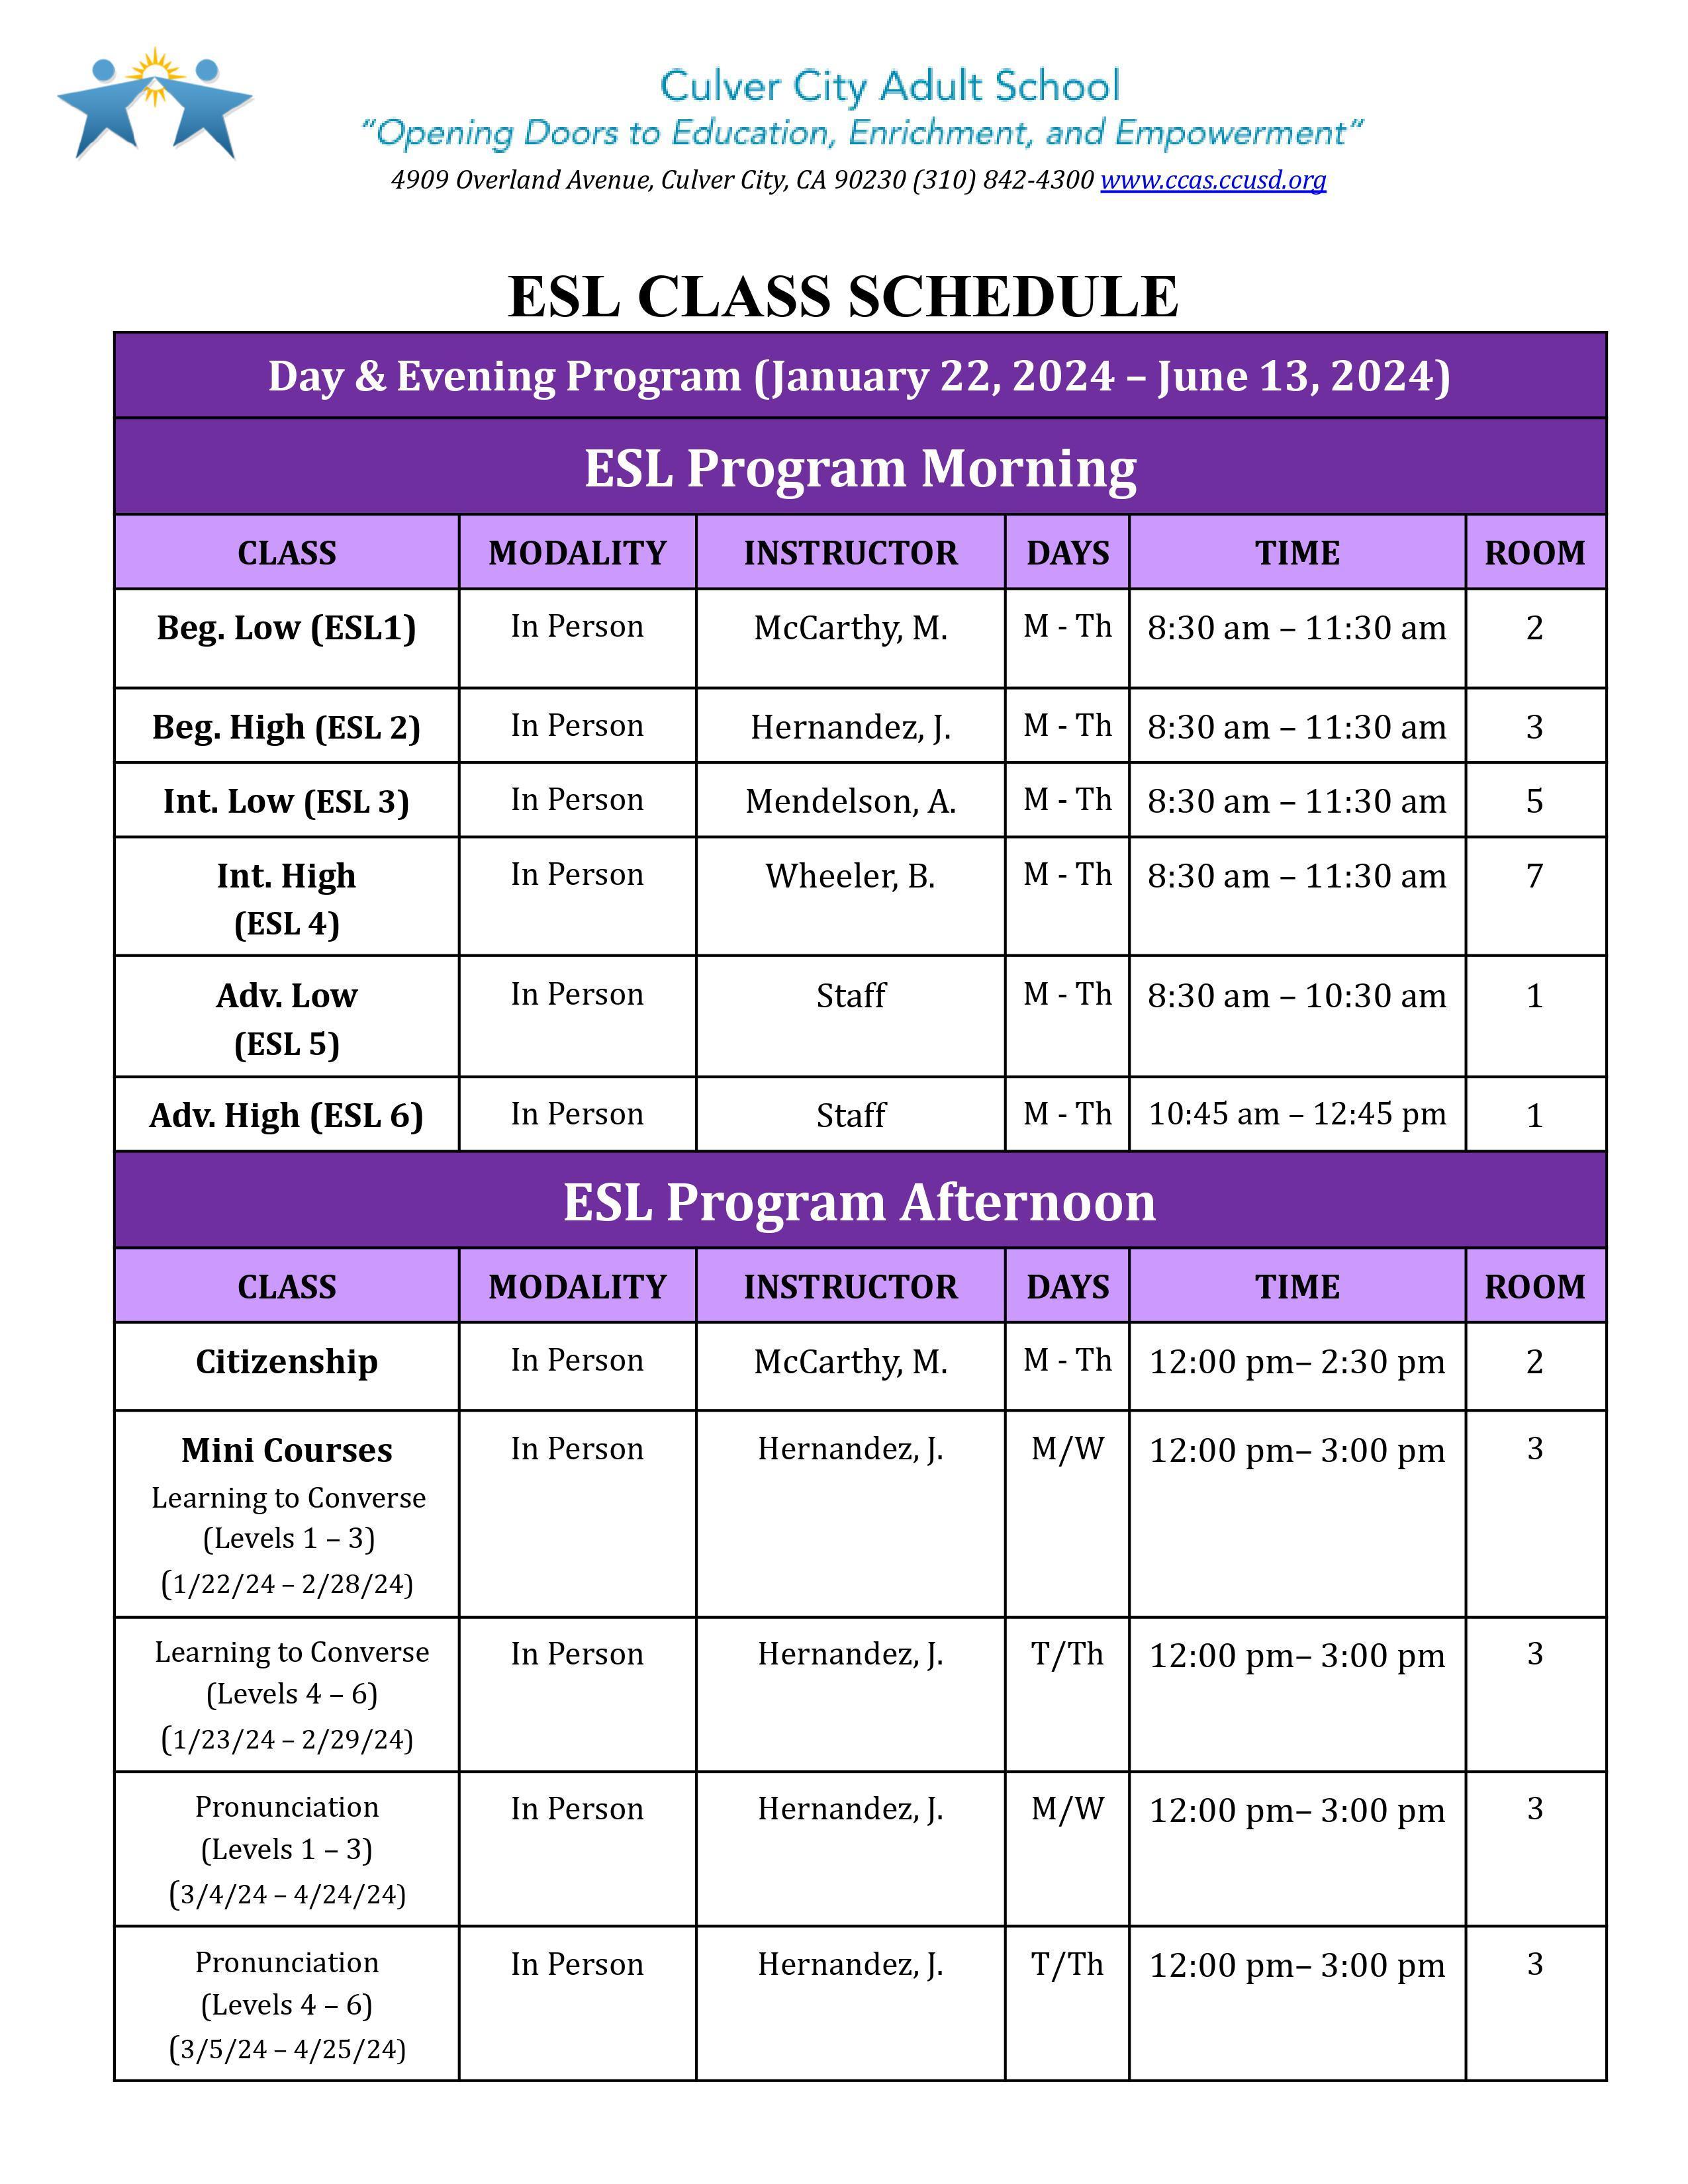 ESL Class Schedule 